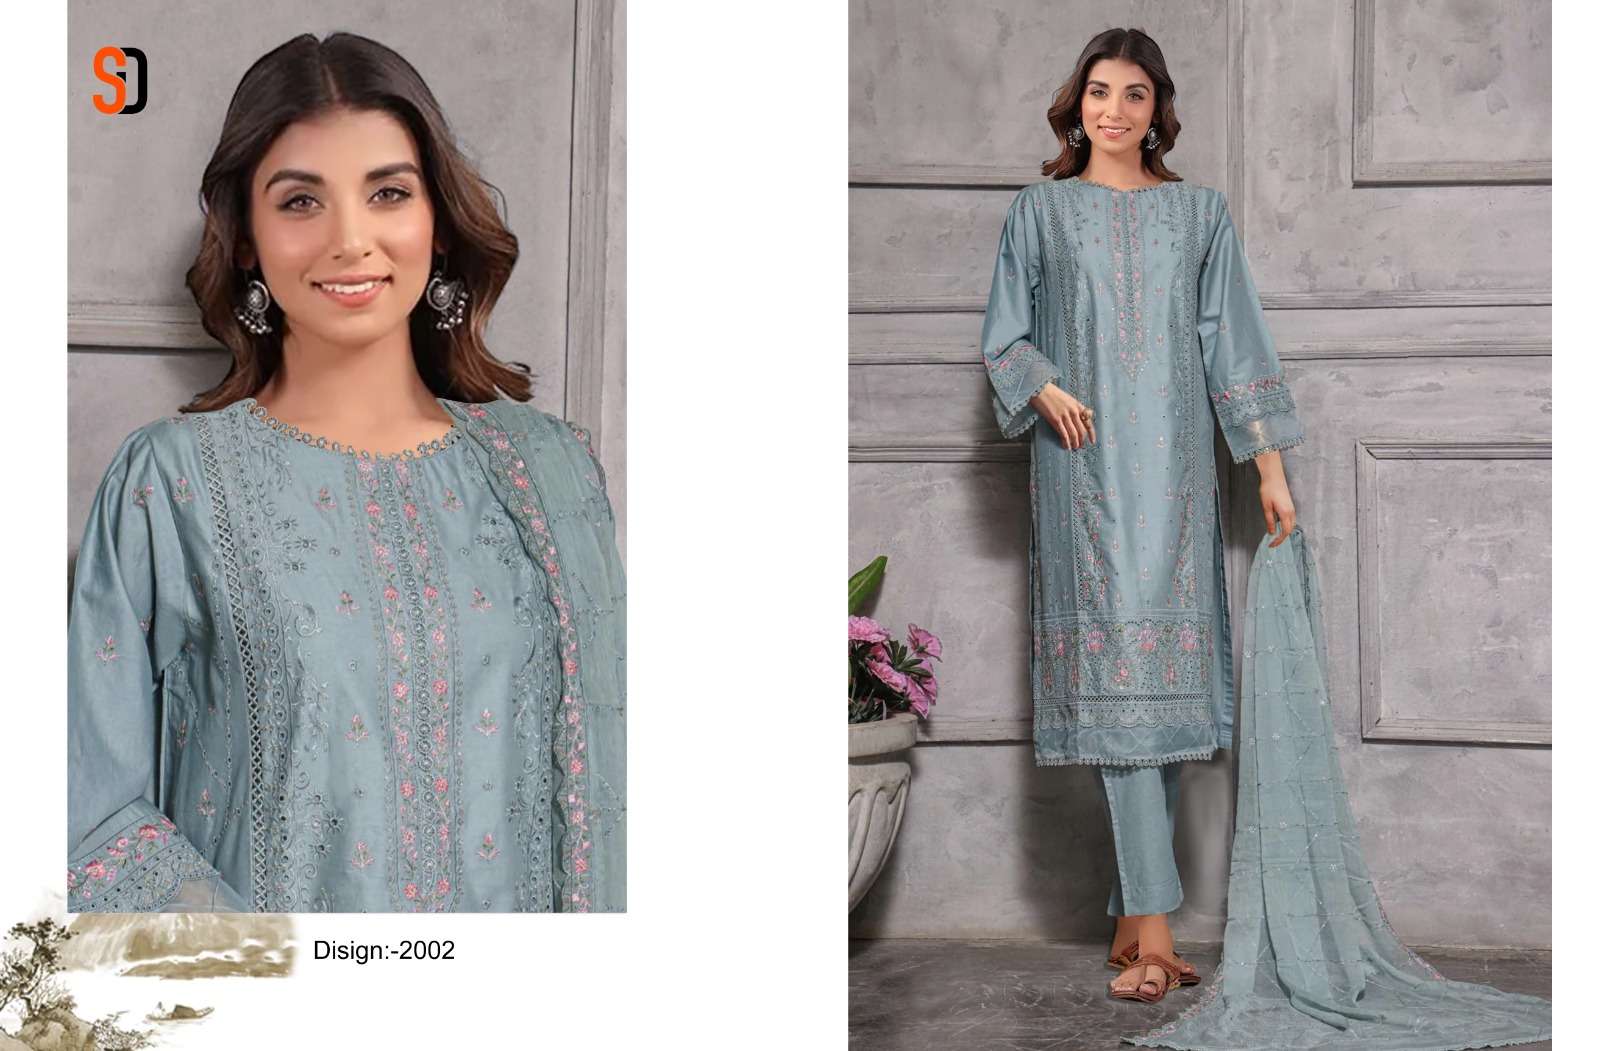 Shraddha Bin Saeed Dhagga Kari Collection Vol 2 Pakistani Suit Wholesale catalog